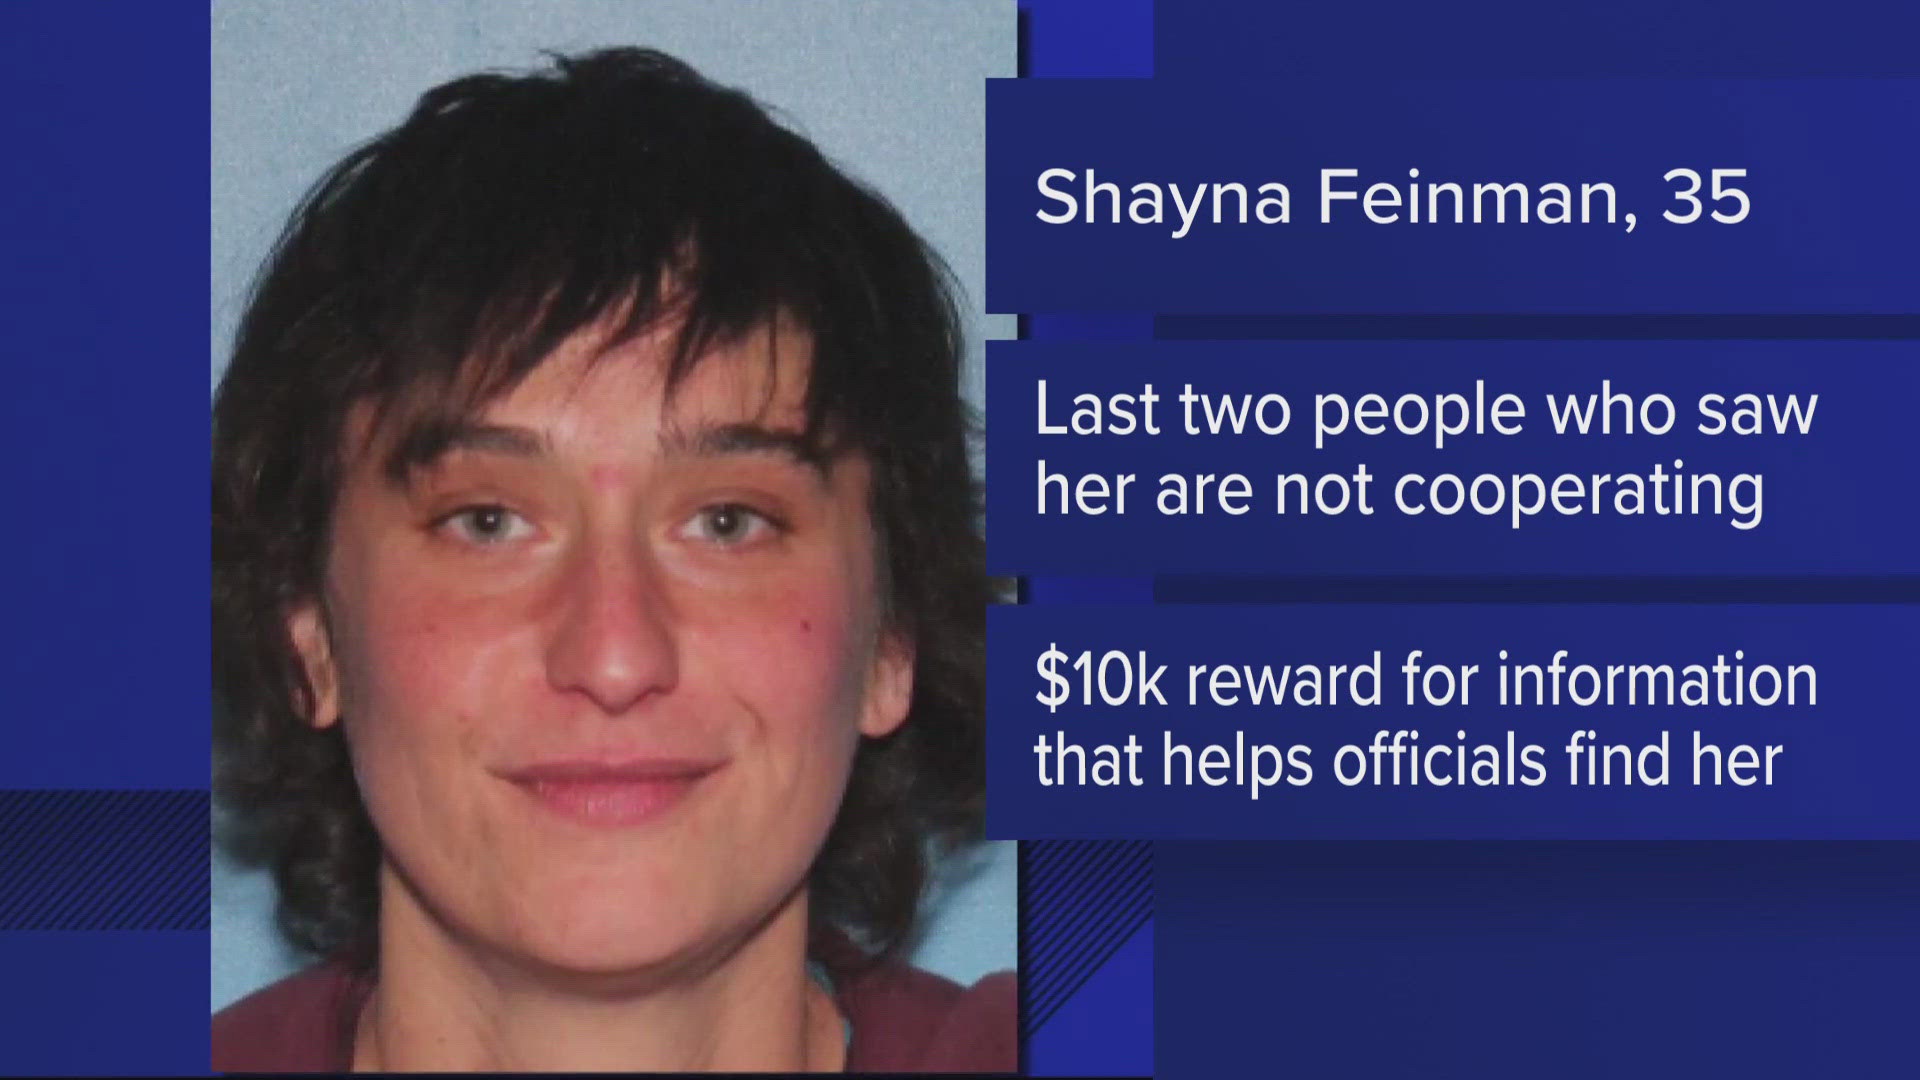 Shanya Feinman was last seen on March 9.